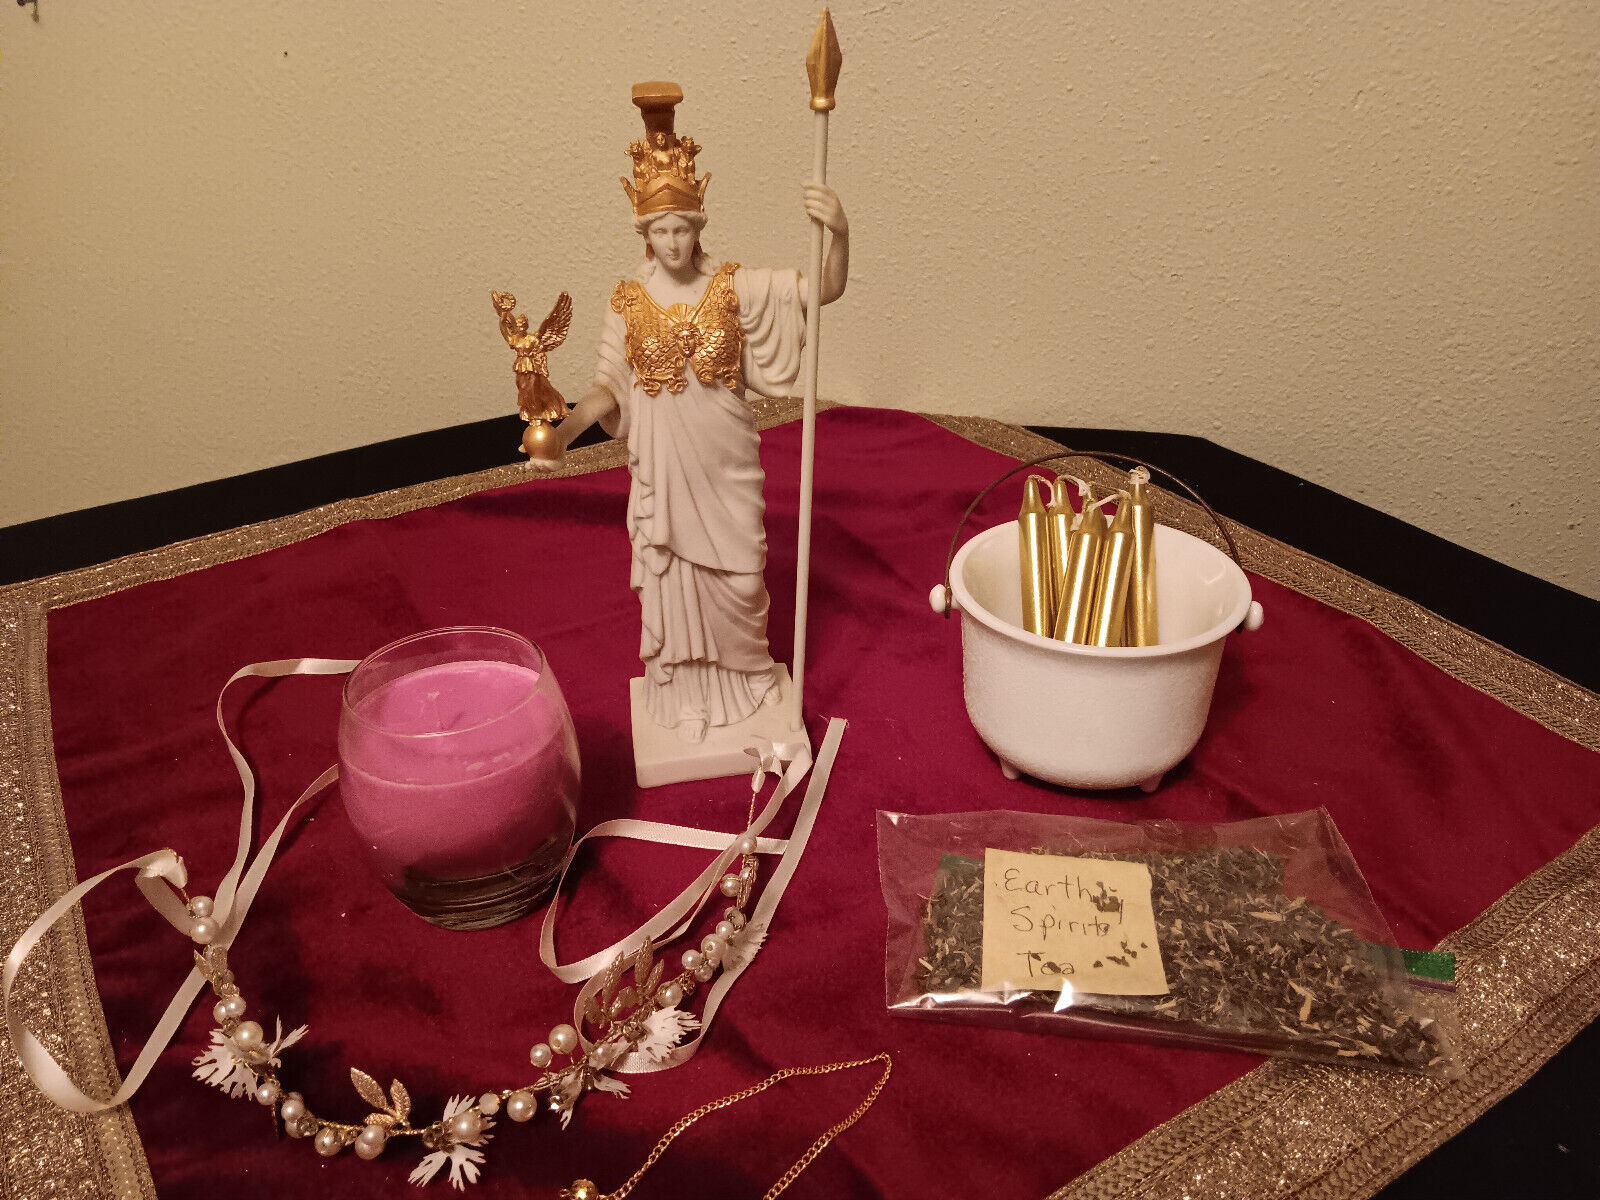 Beautiful Goddess Athena/Sophia, Cauldron, Earth Spirit Tea, Gold Chime Candles